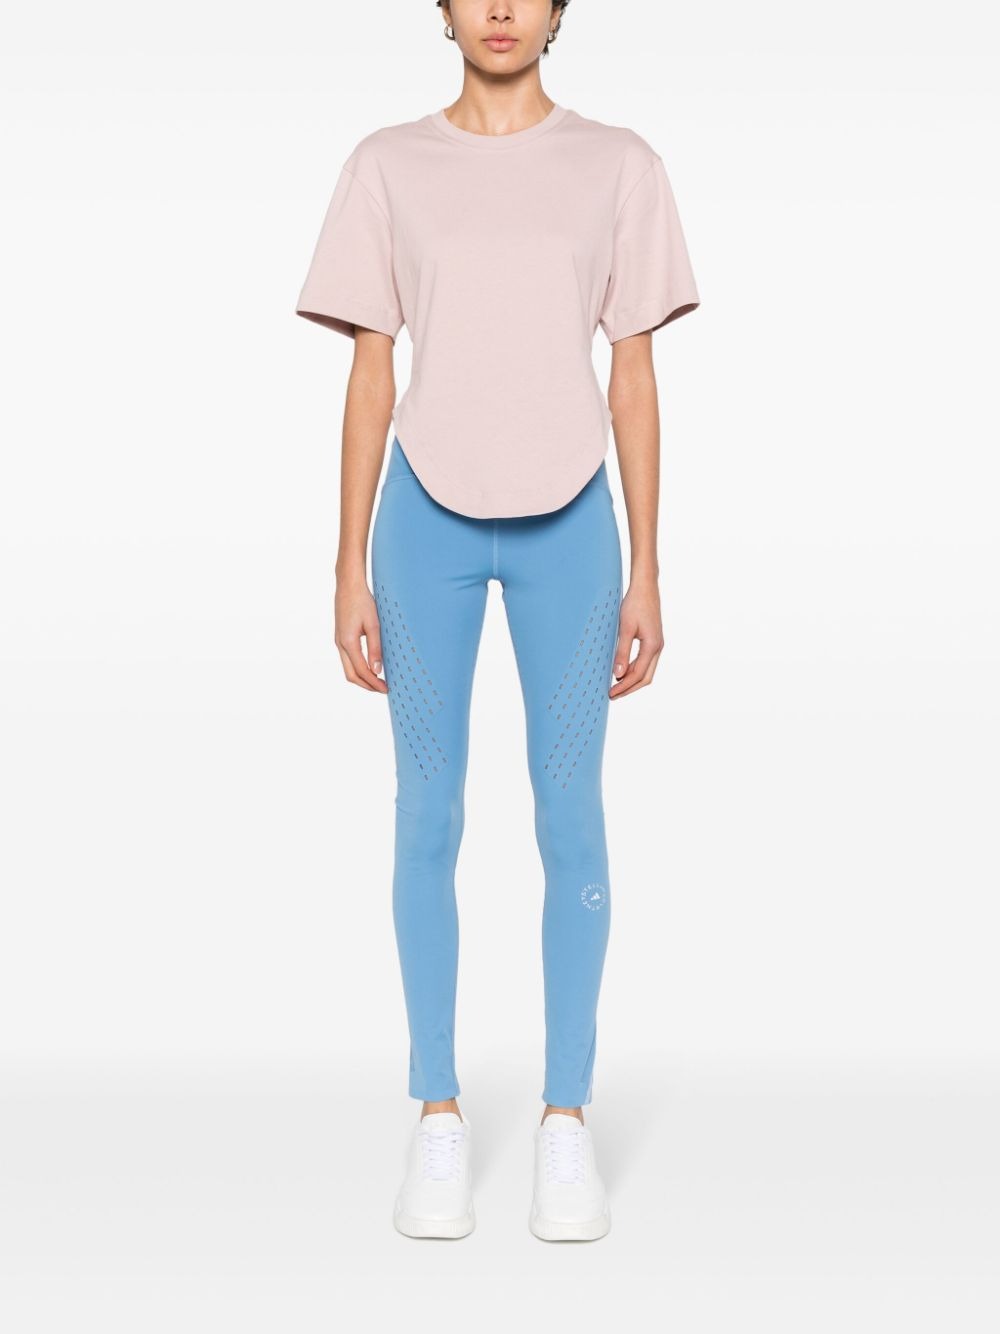 Adidas x Stella McCartney Curved-Hem T-shirt in Pink